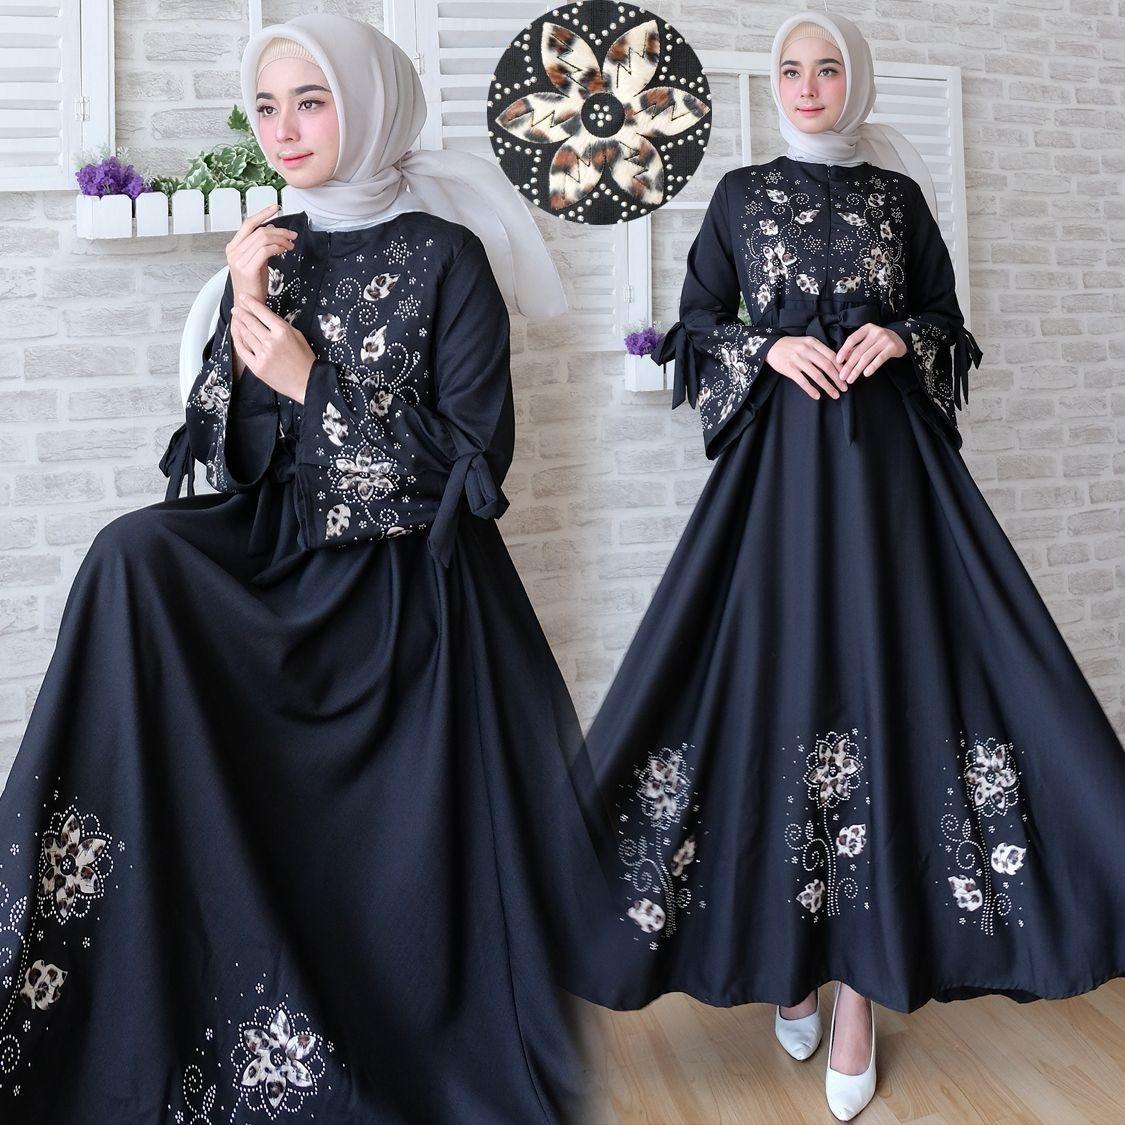 Flavia Store Gamis Syari Busui Motif Bunga FS0749 - PINK / Baju Muslim Wanita Syar'i / Gaun Pesta Muslimah / Maxi Dress Lengan Panjang / Nimaxiflower